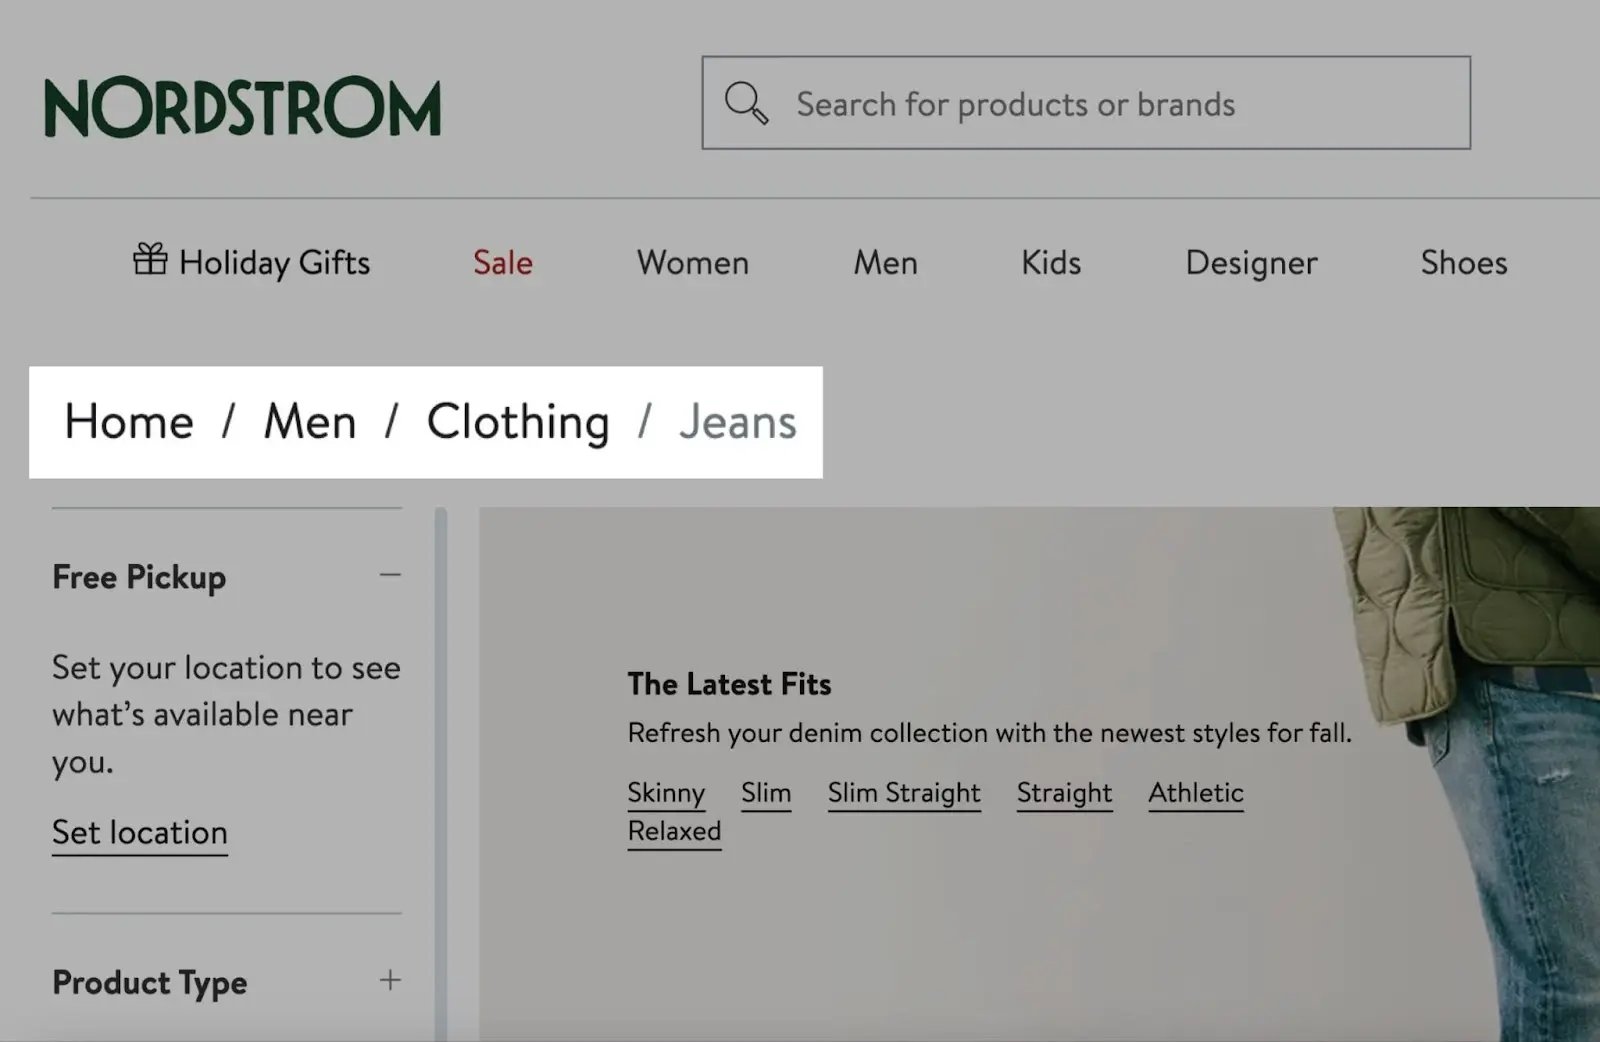 Breadcrumb navigation on Nordstrom's website showing "Home / Men / Clothing / Jeans"